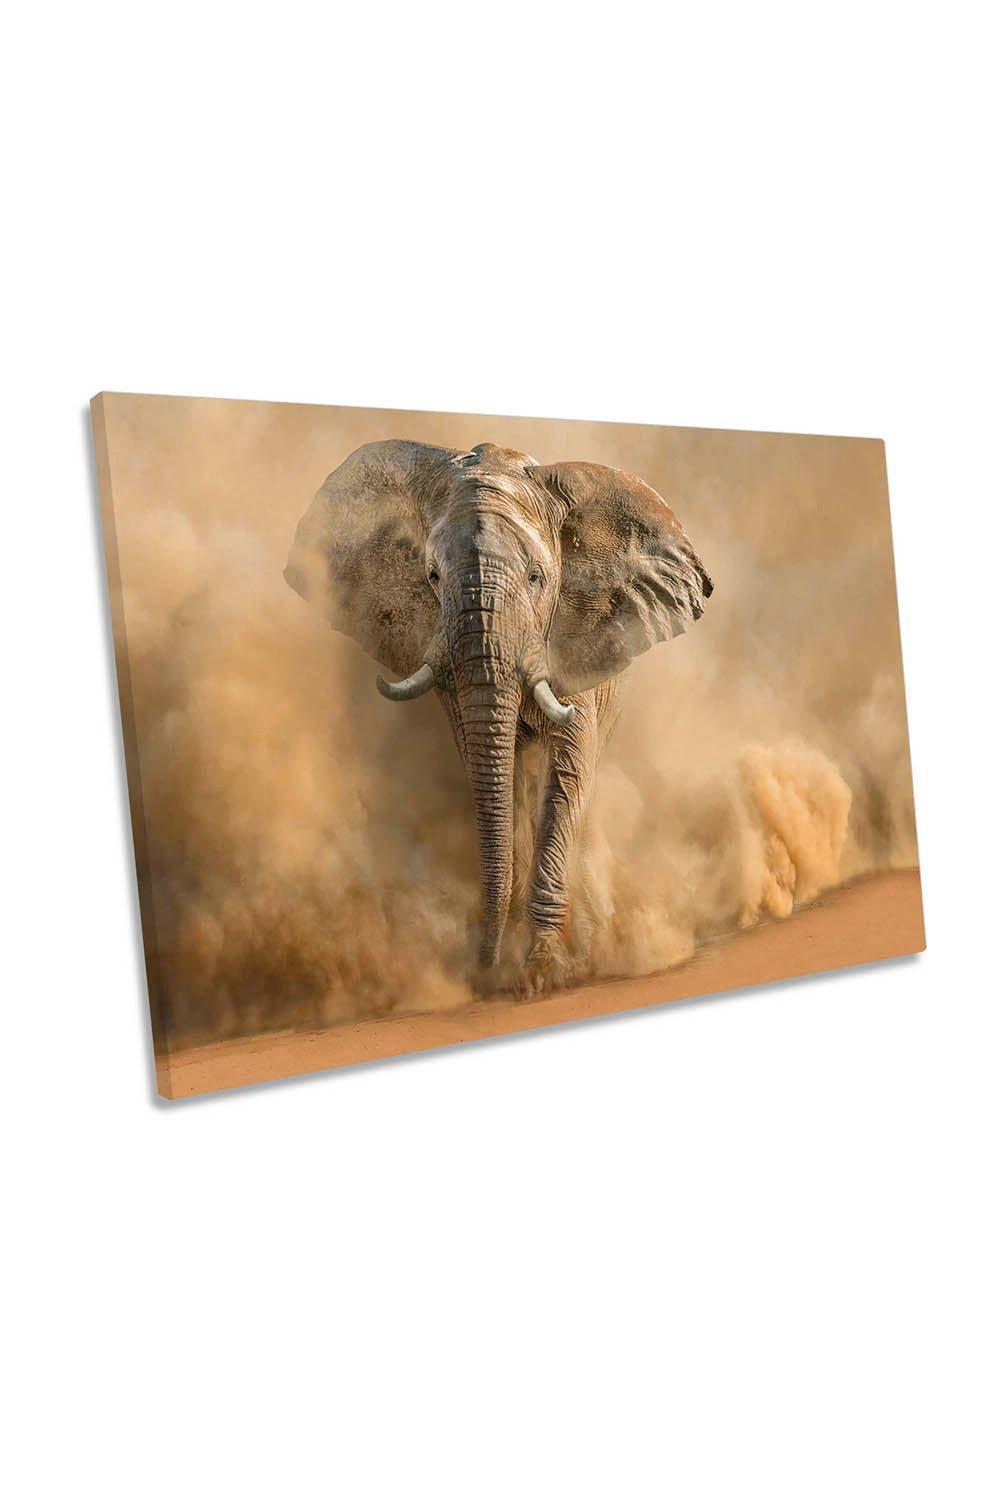 Desert Storm Elephant Wildlife Canvas Wall Art Picture Print